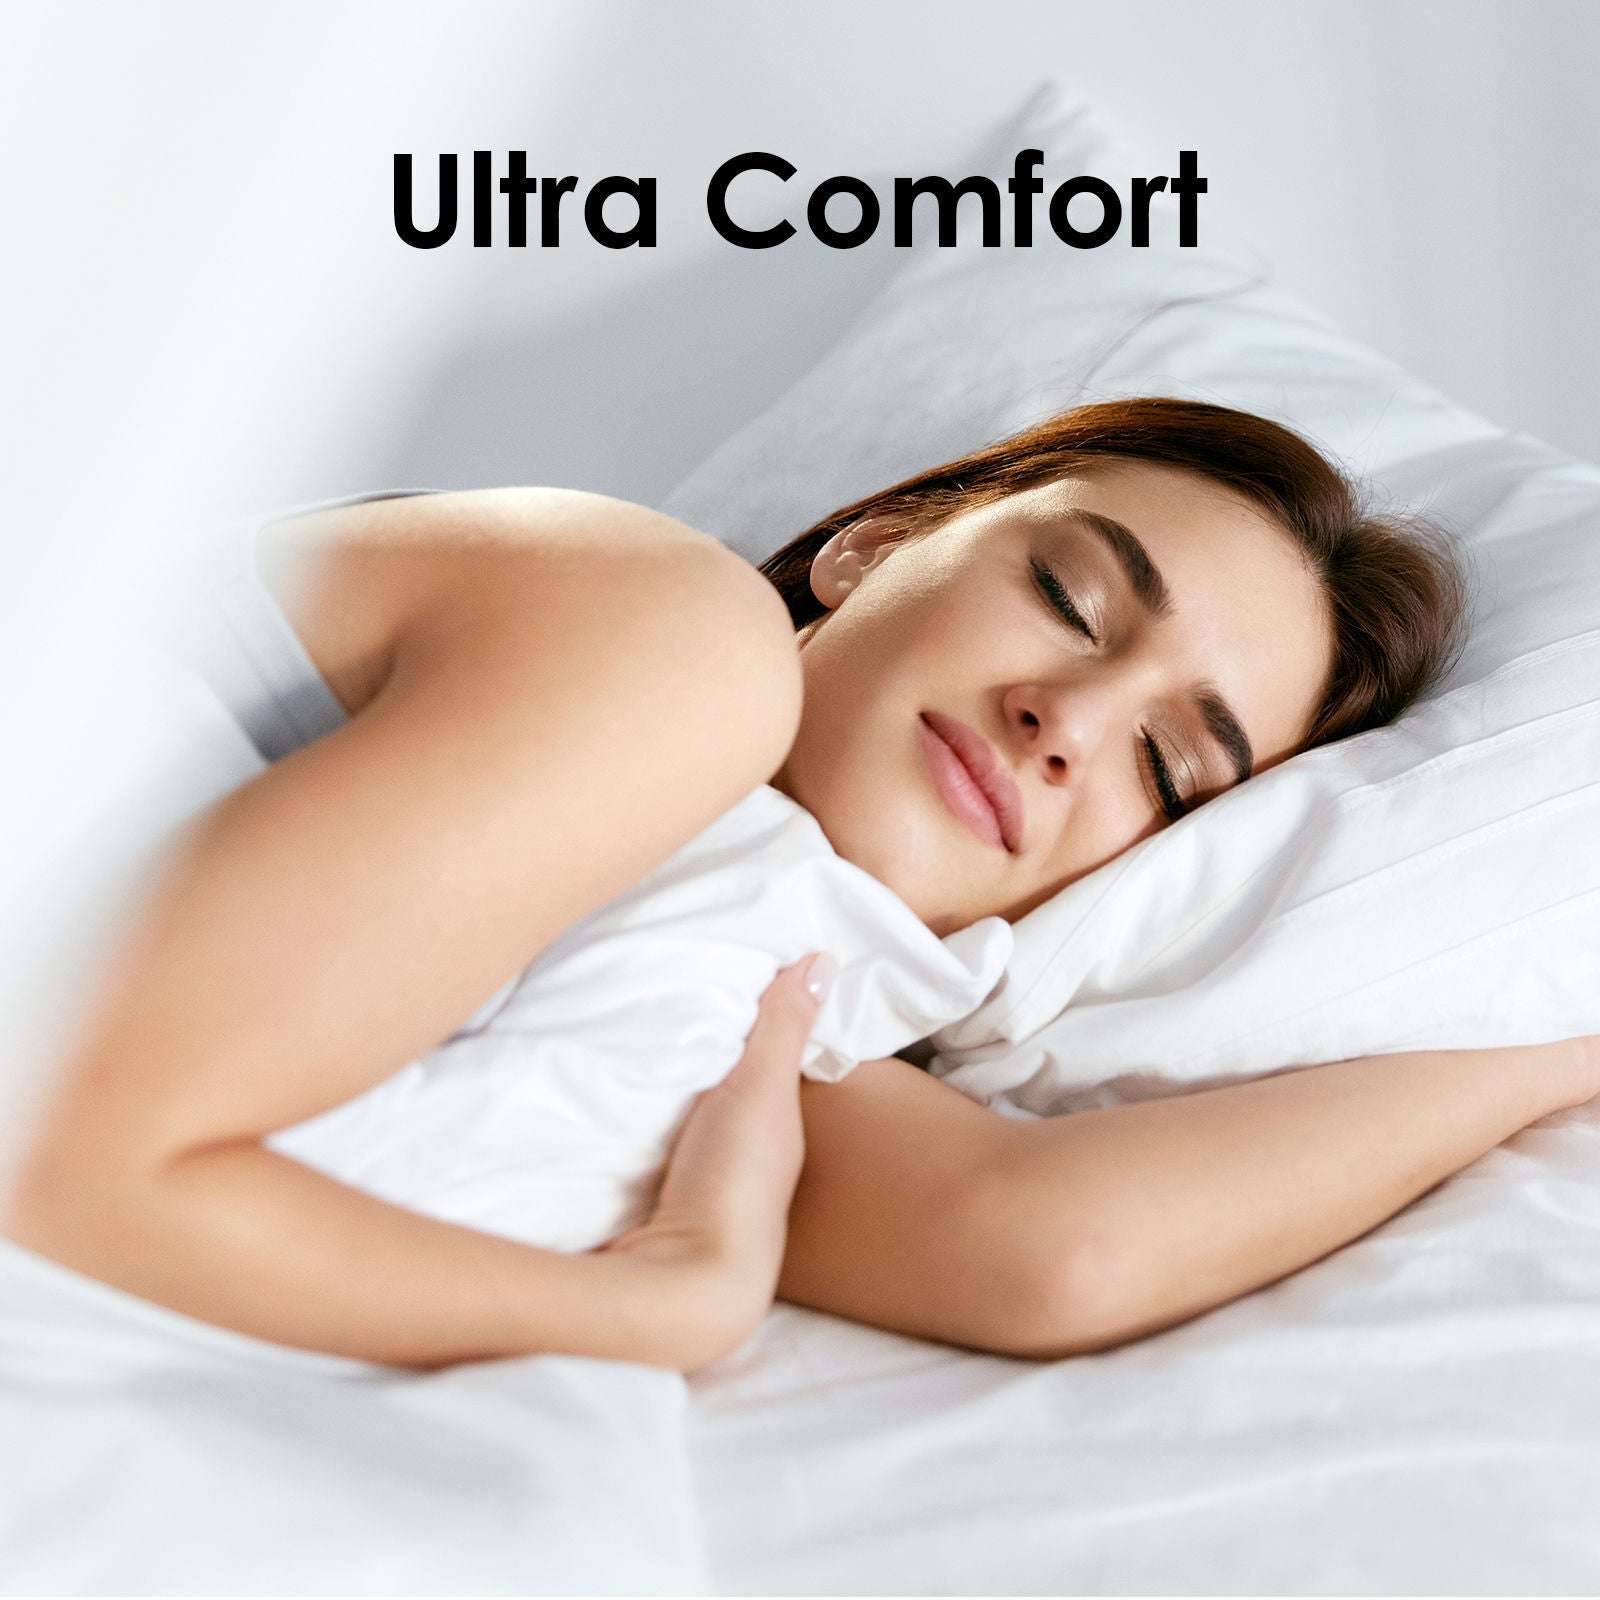 Royal Comfort 1000 Thread Count Cotton Blend Quilt Cover Set Premium Hotel Grade-Bed Linen-PEROZ Accessories